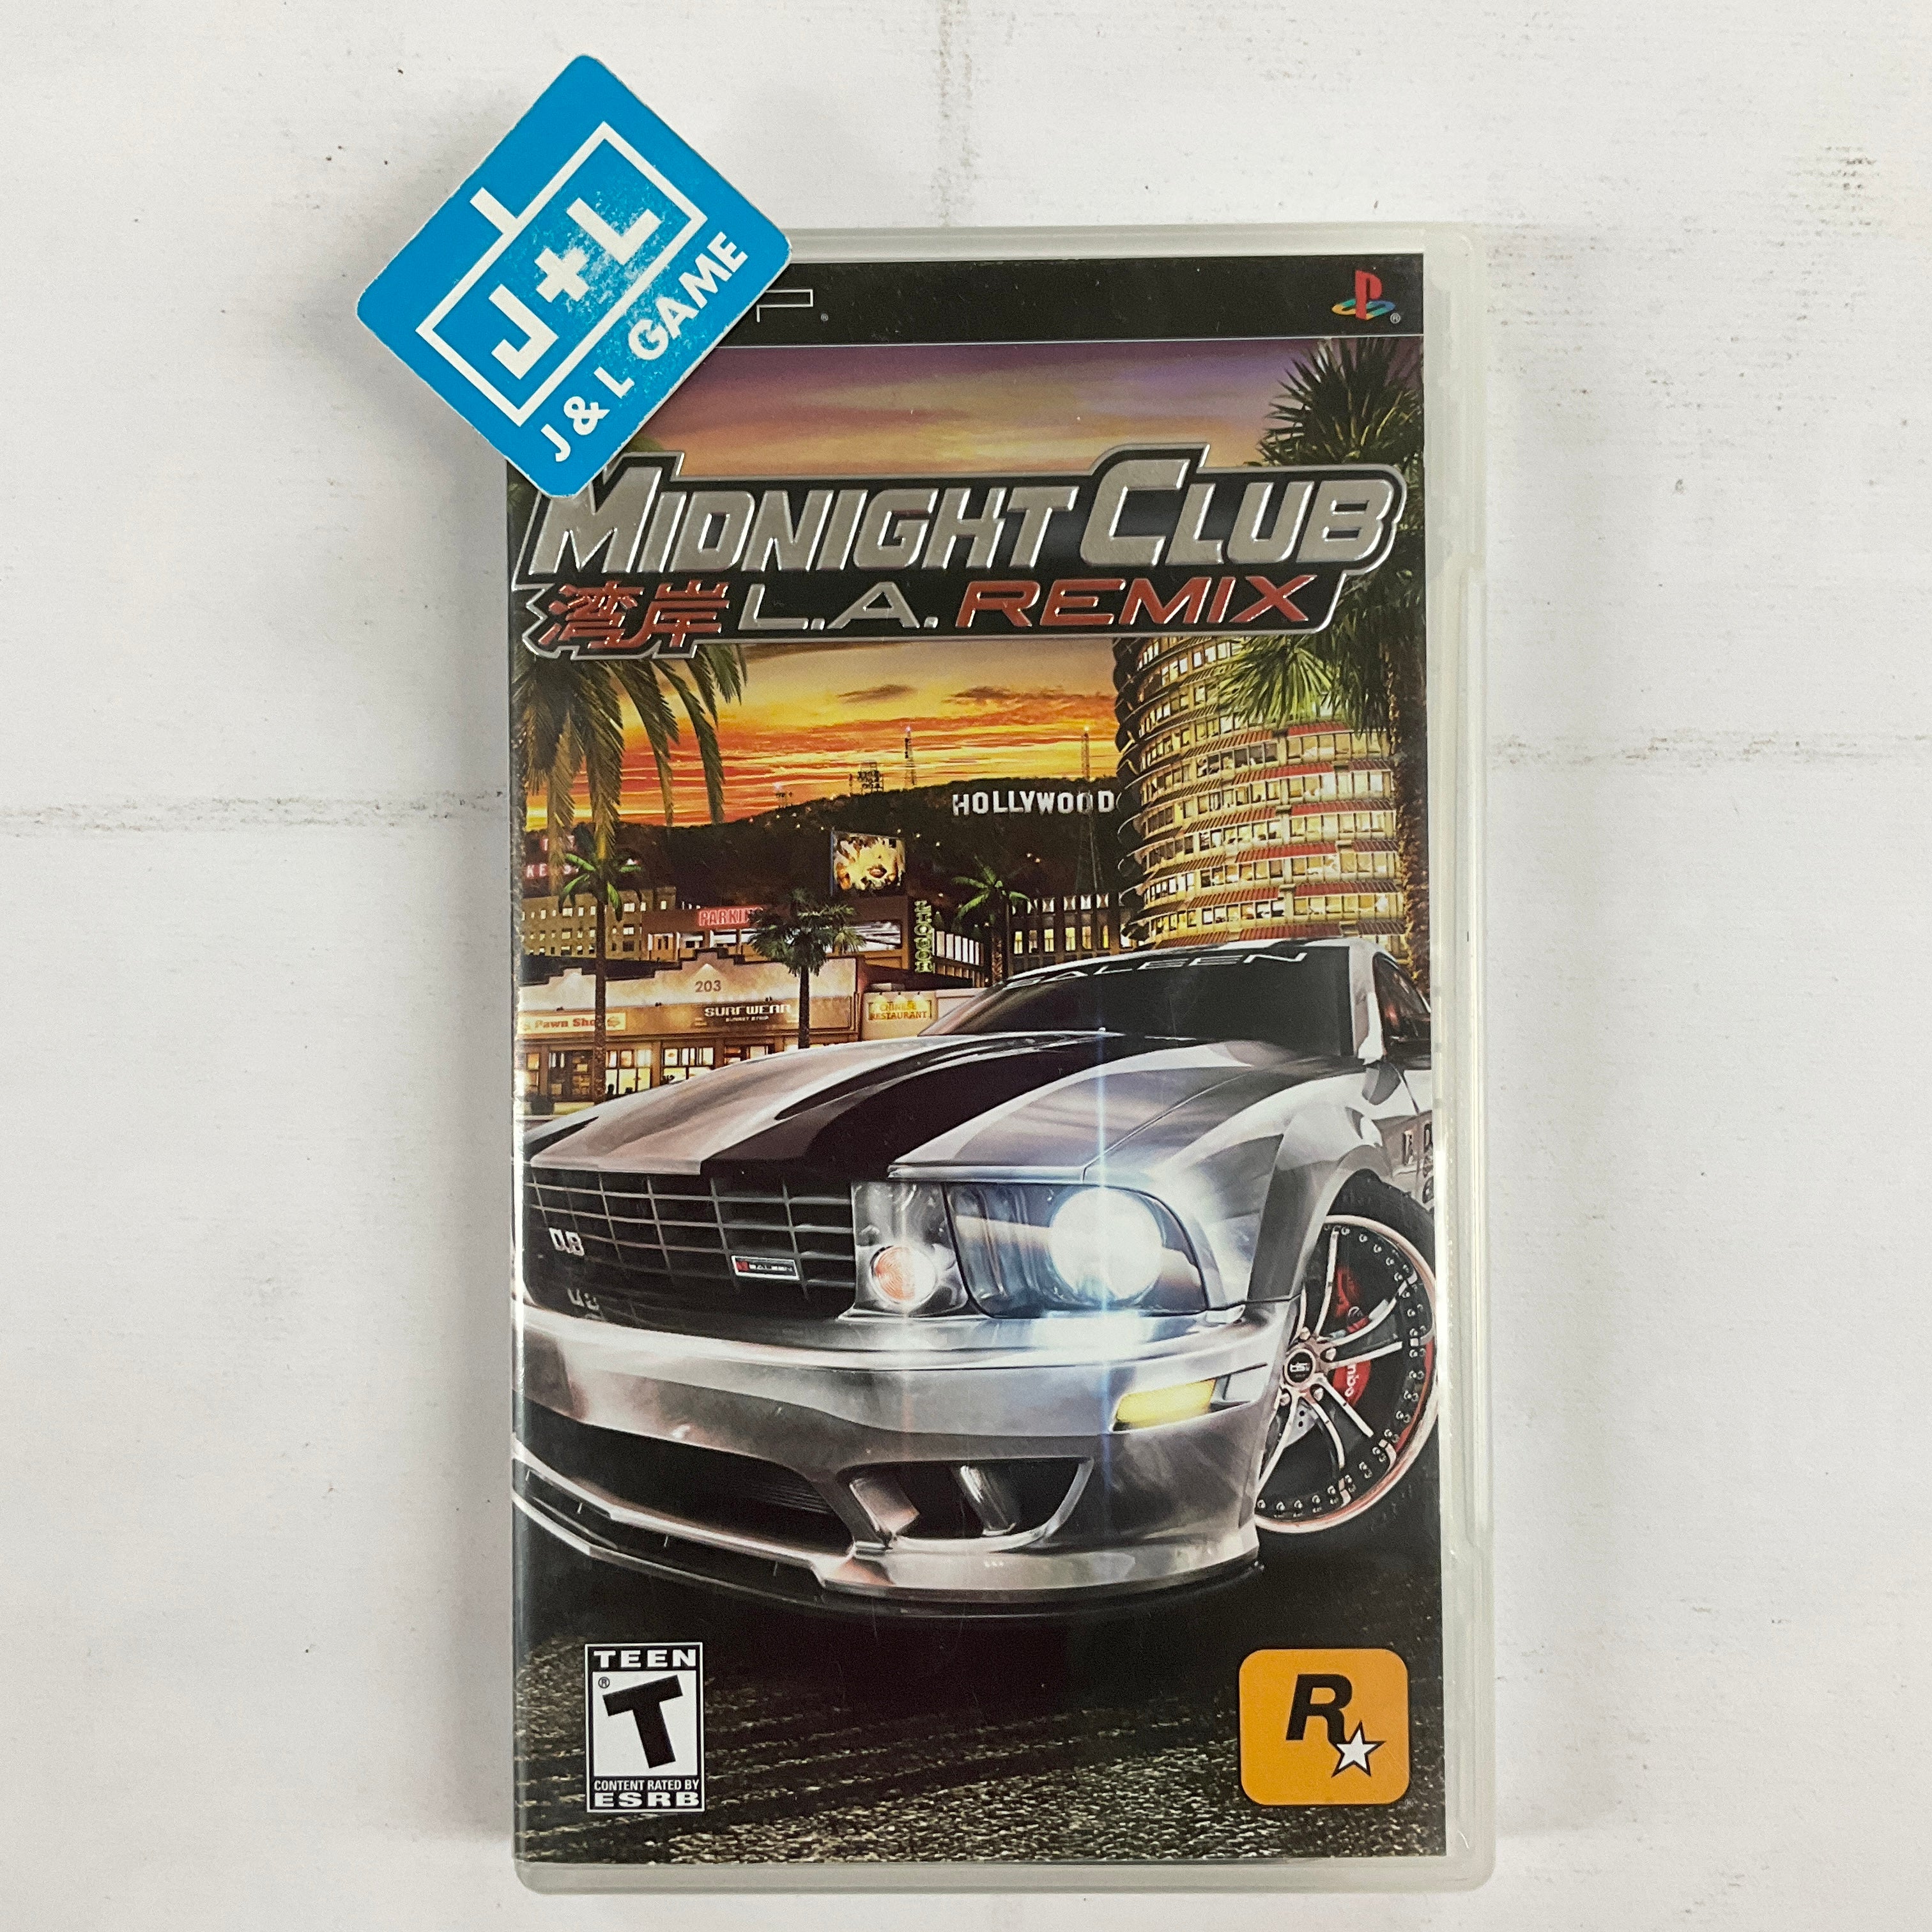 Midnight Club: LA Remix - Sony PSP [Pre-Owned] Video Games Rockstar Games   